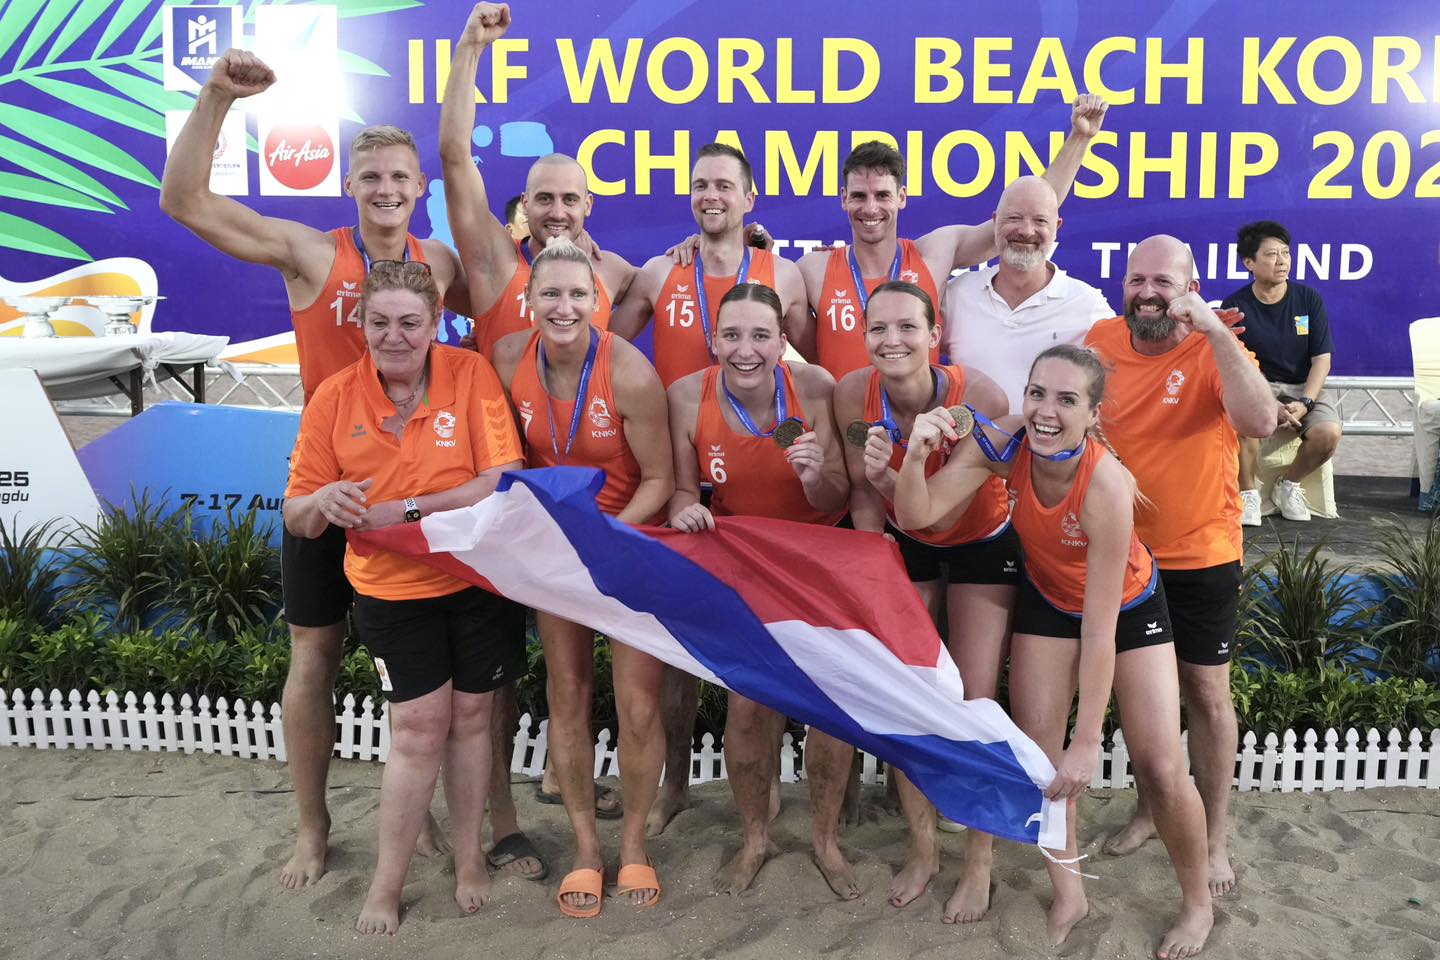 Netherlands claim revenge, Crowned champions at dramatic IKF Beach Korfball Worlds – International Korfball Federation